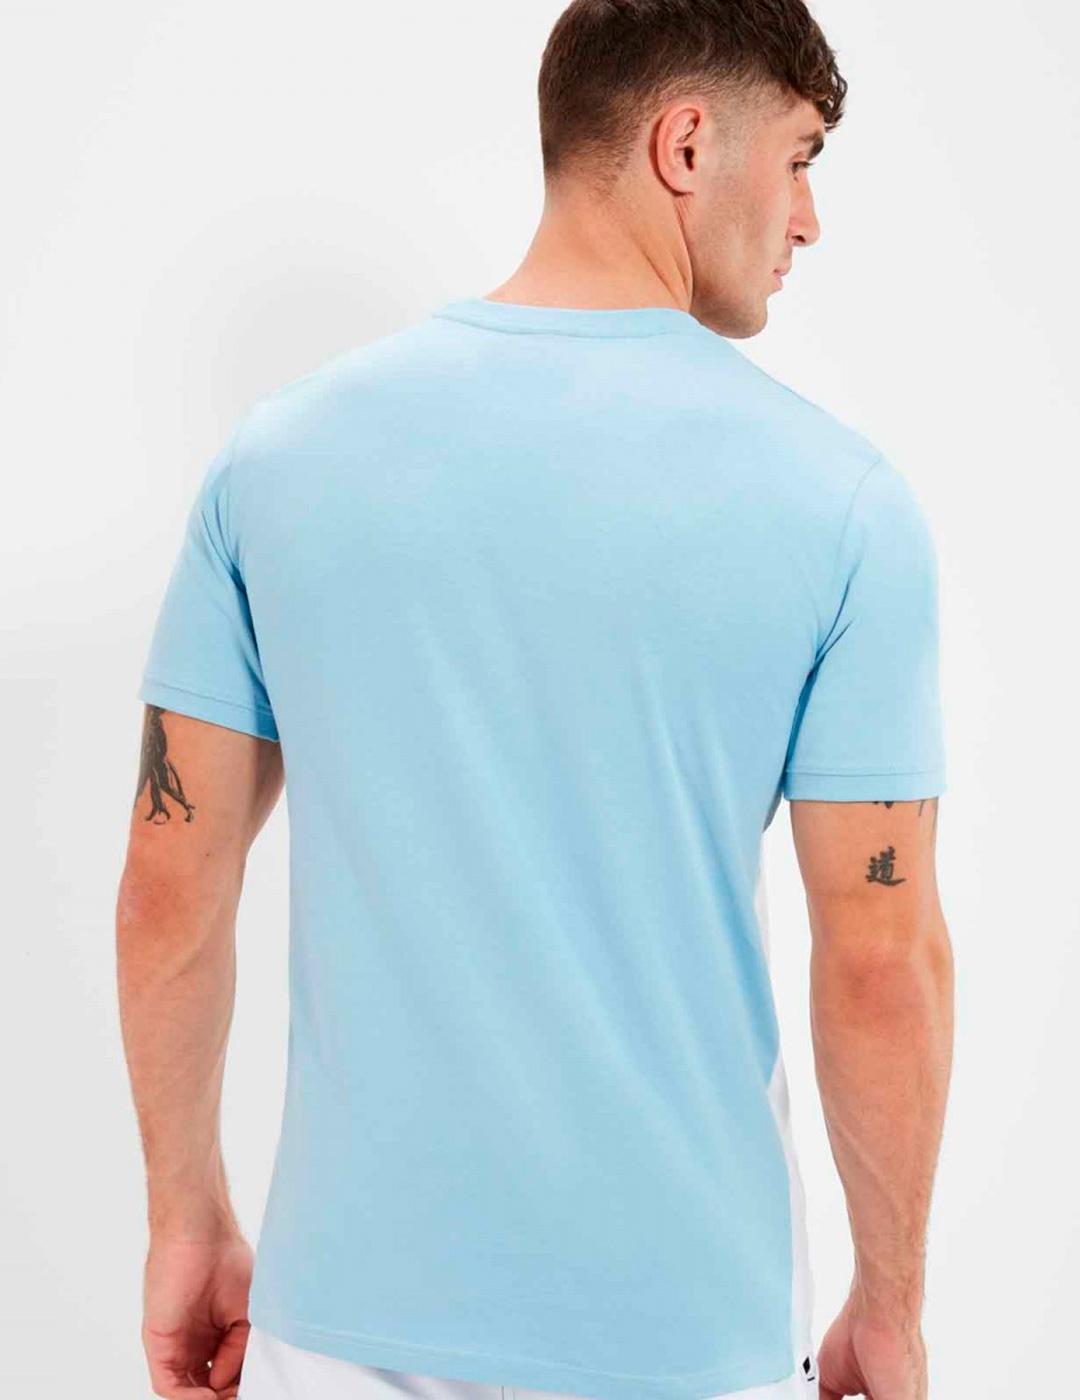 Camiseta ELLESSE VENIRE - Light Blue/White/Navy